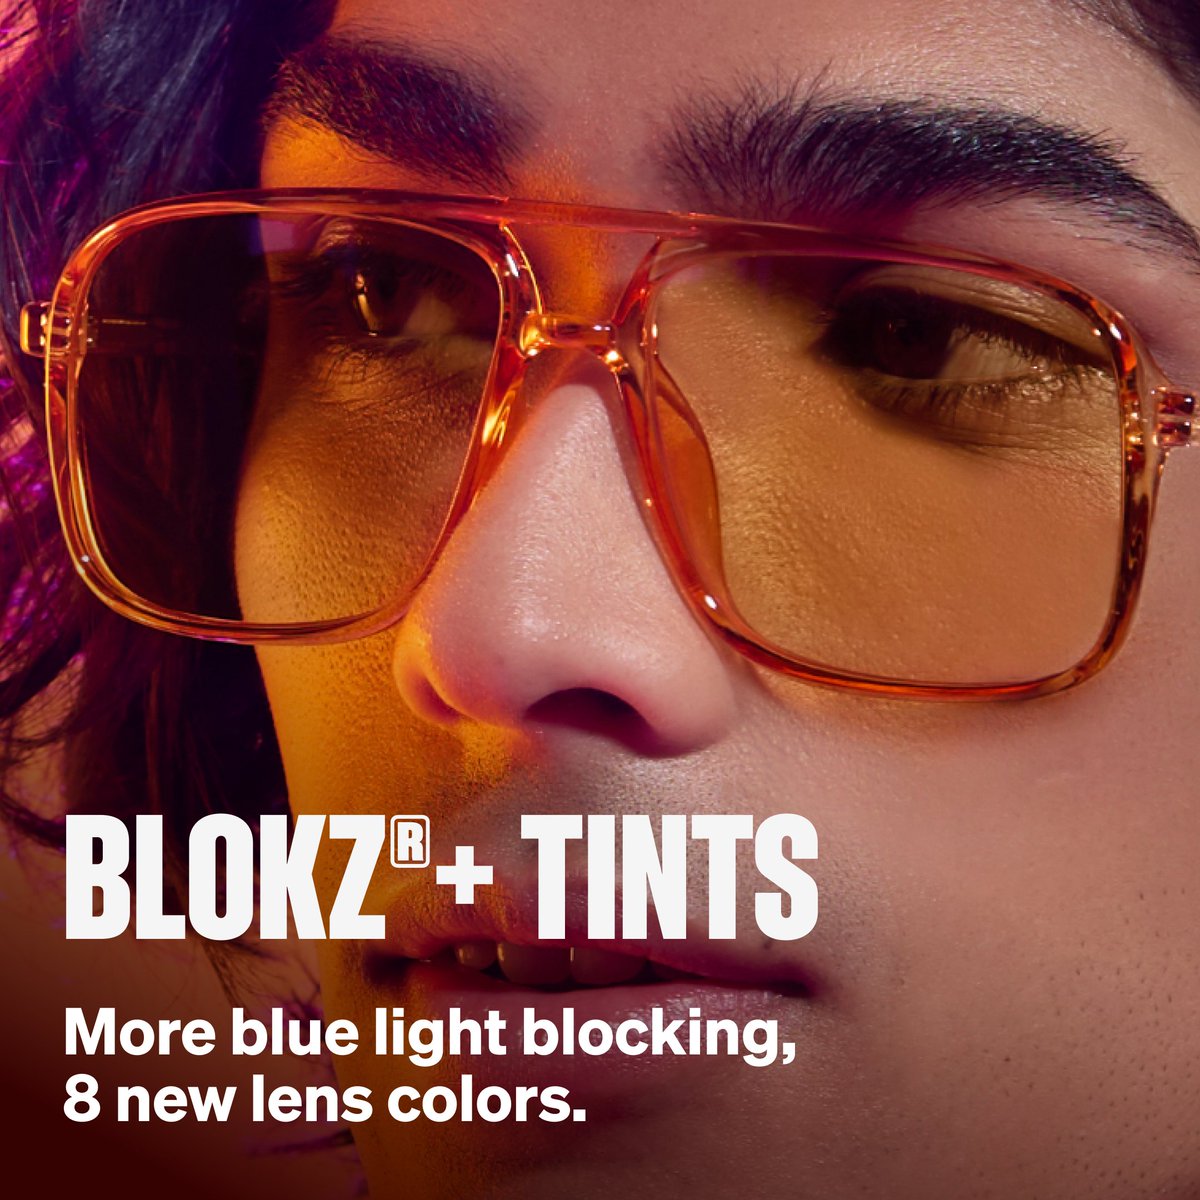 More blue light blocking, now in 8 vibrant colored lenses 🌈 Shop Blokz®+ Tints: text.zenni.io/BlokzPlusLenses